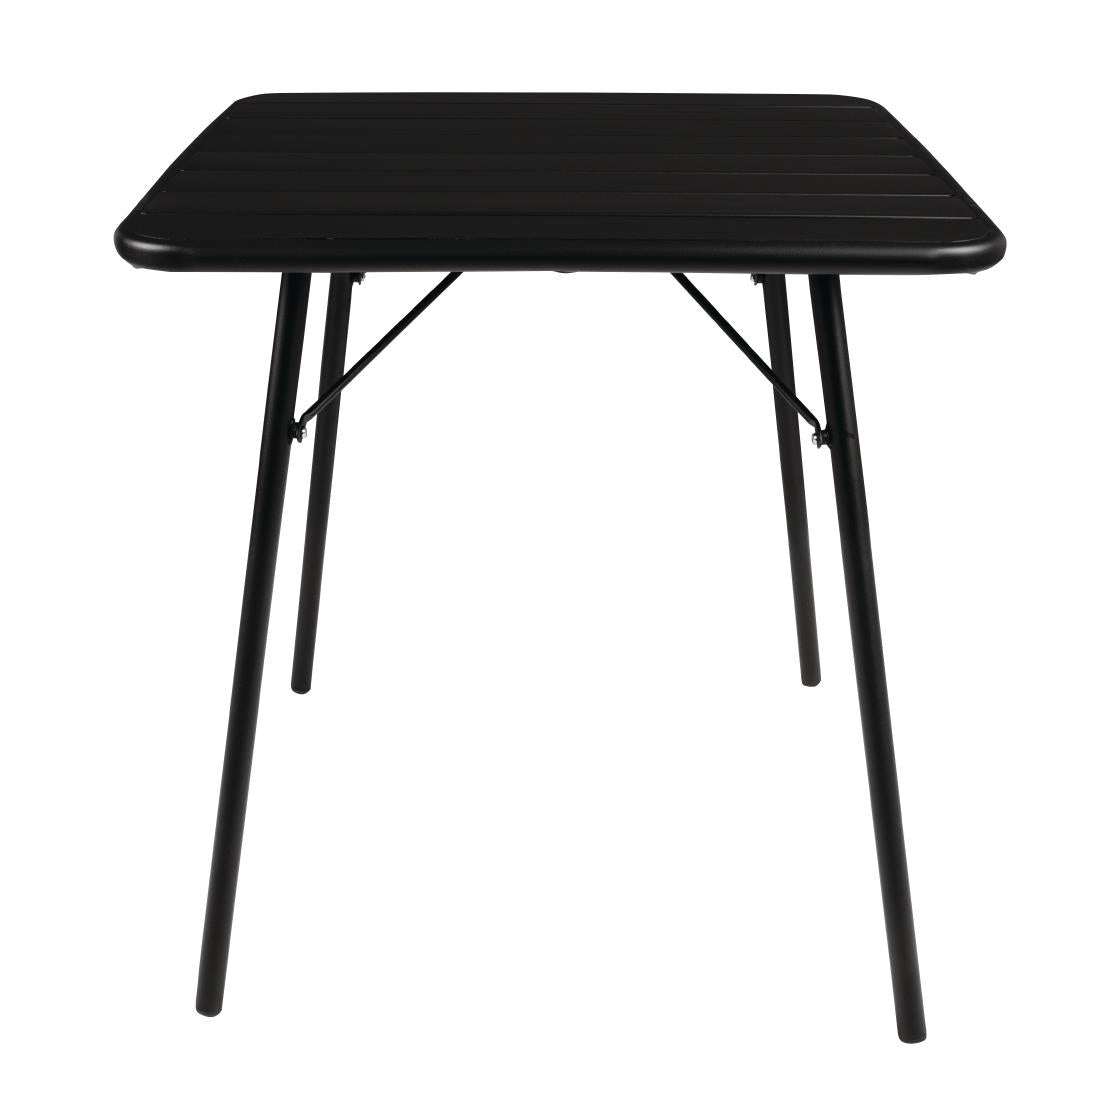 CS731 Bolero Square Slatted Steel Table Black 700mm JD Catering Equipment Solutions Ltd